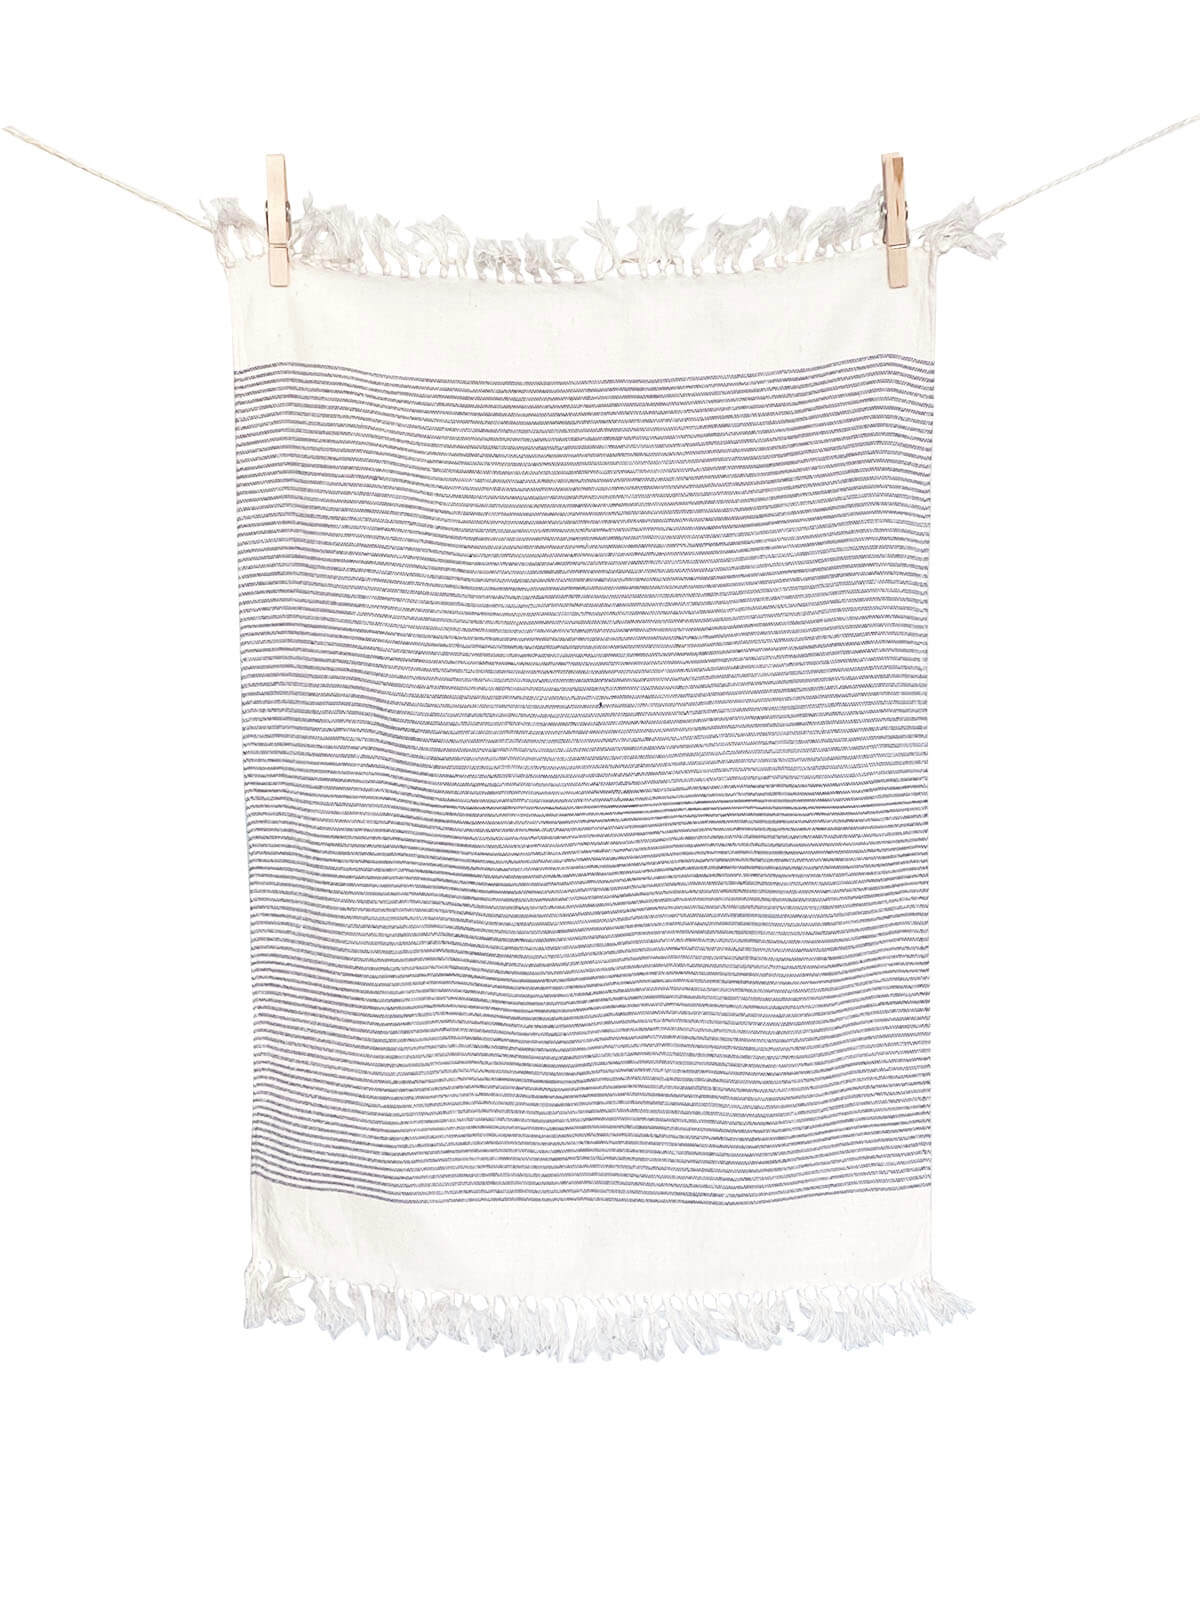 Handwoven Tea Towel - White w/t Oatmeal Stripes